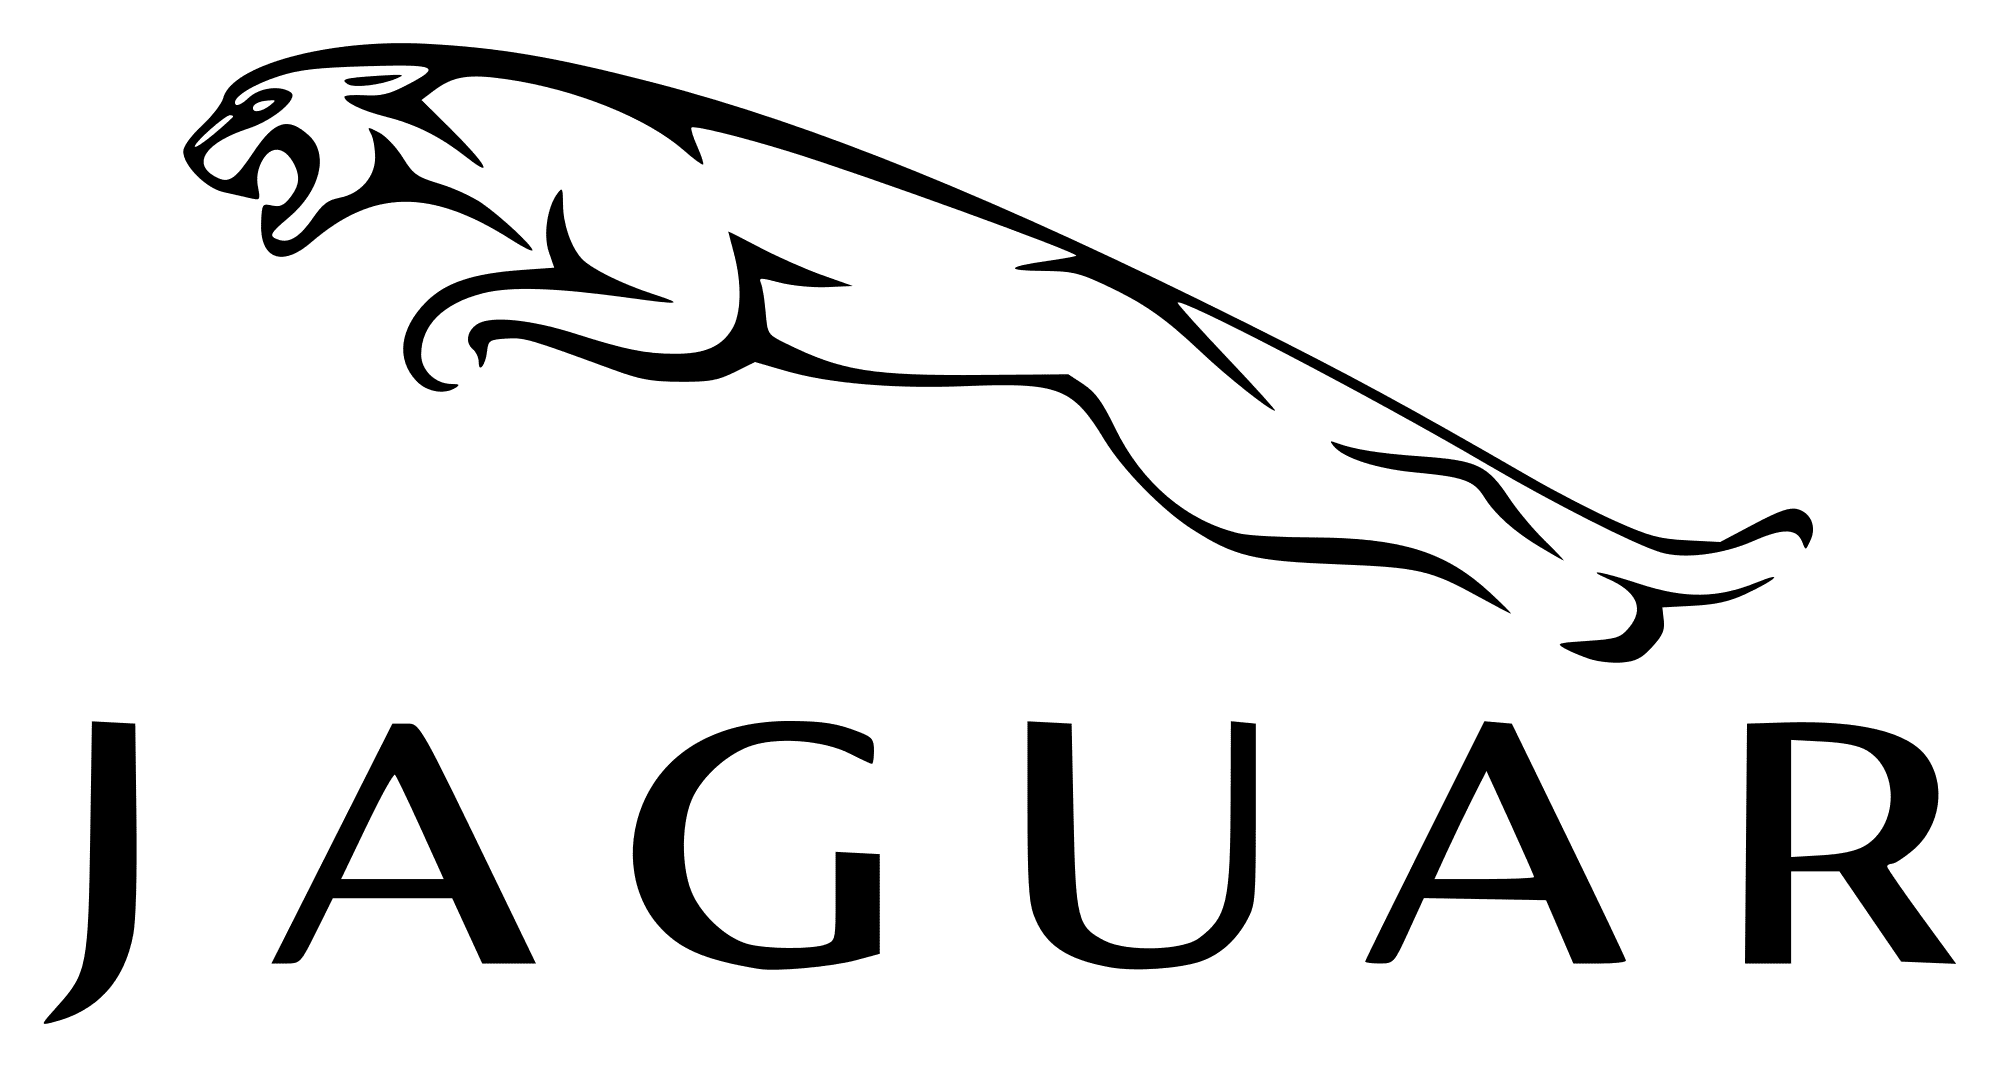 https://missglobal.com/wp-content/uploads/2018/05/Jaguar-emblem.png